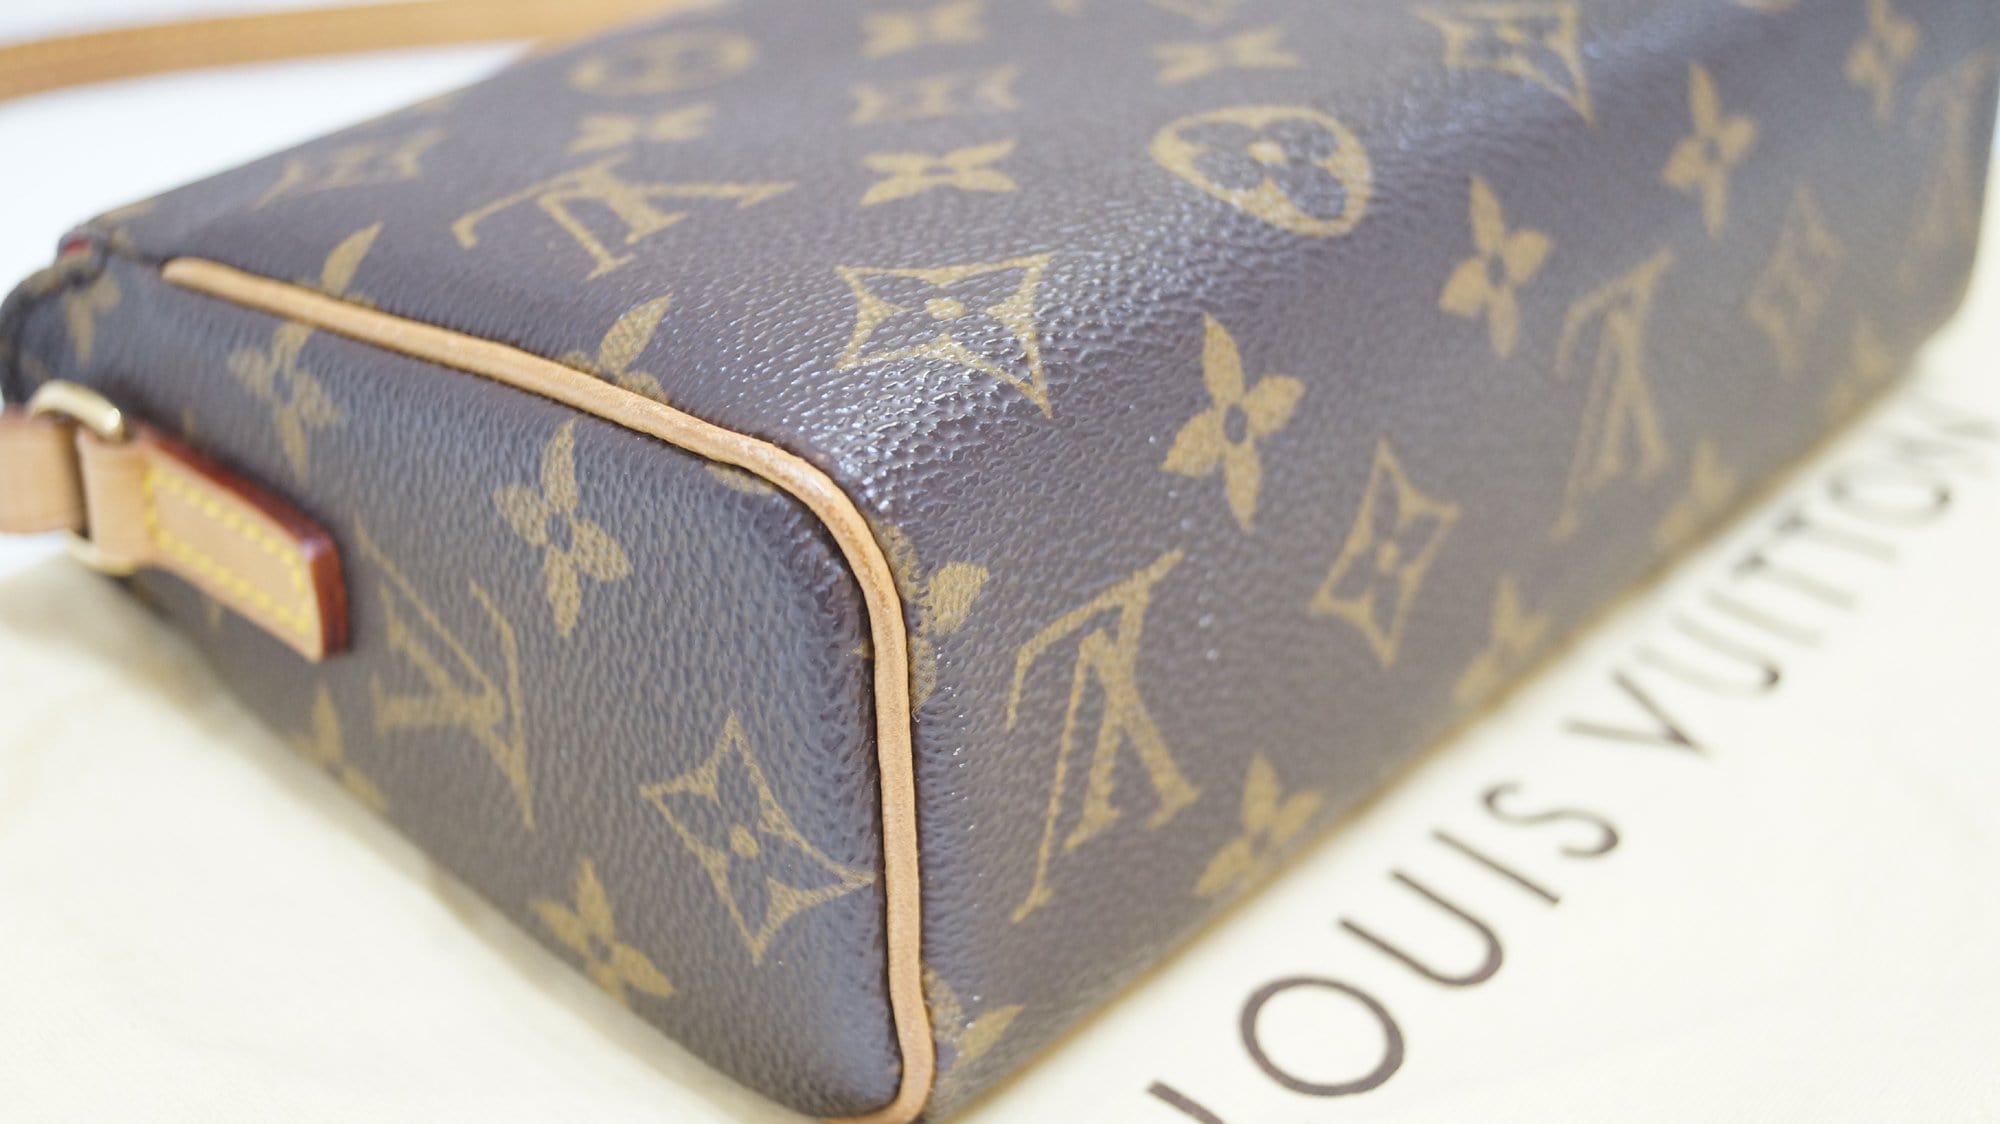 Louis Vuitton Monogram Canvas Recital Bag Louis Vuitton